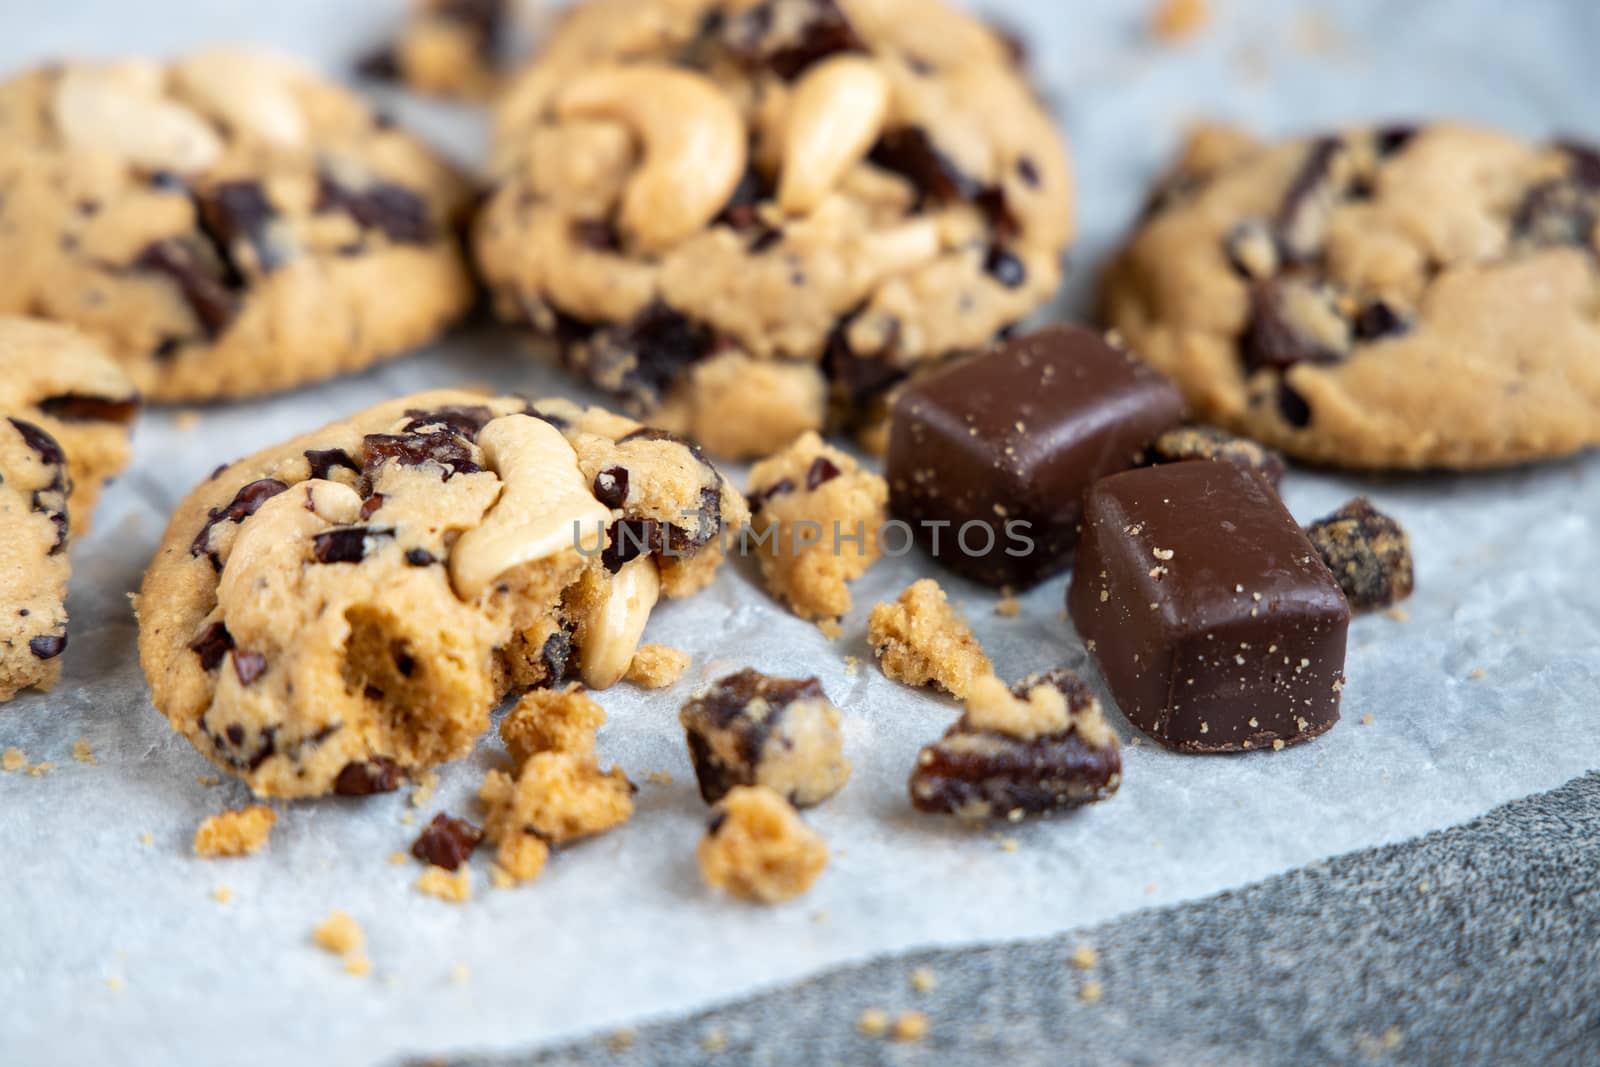 chocolate cookies on gray table